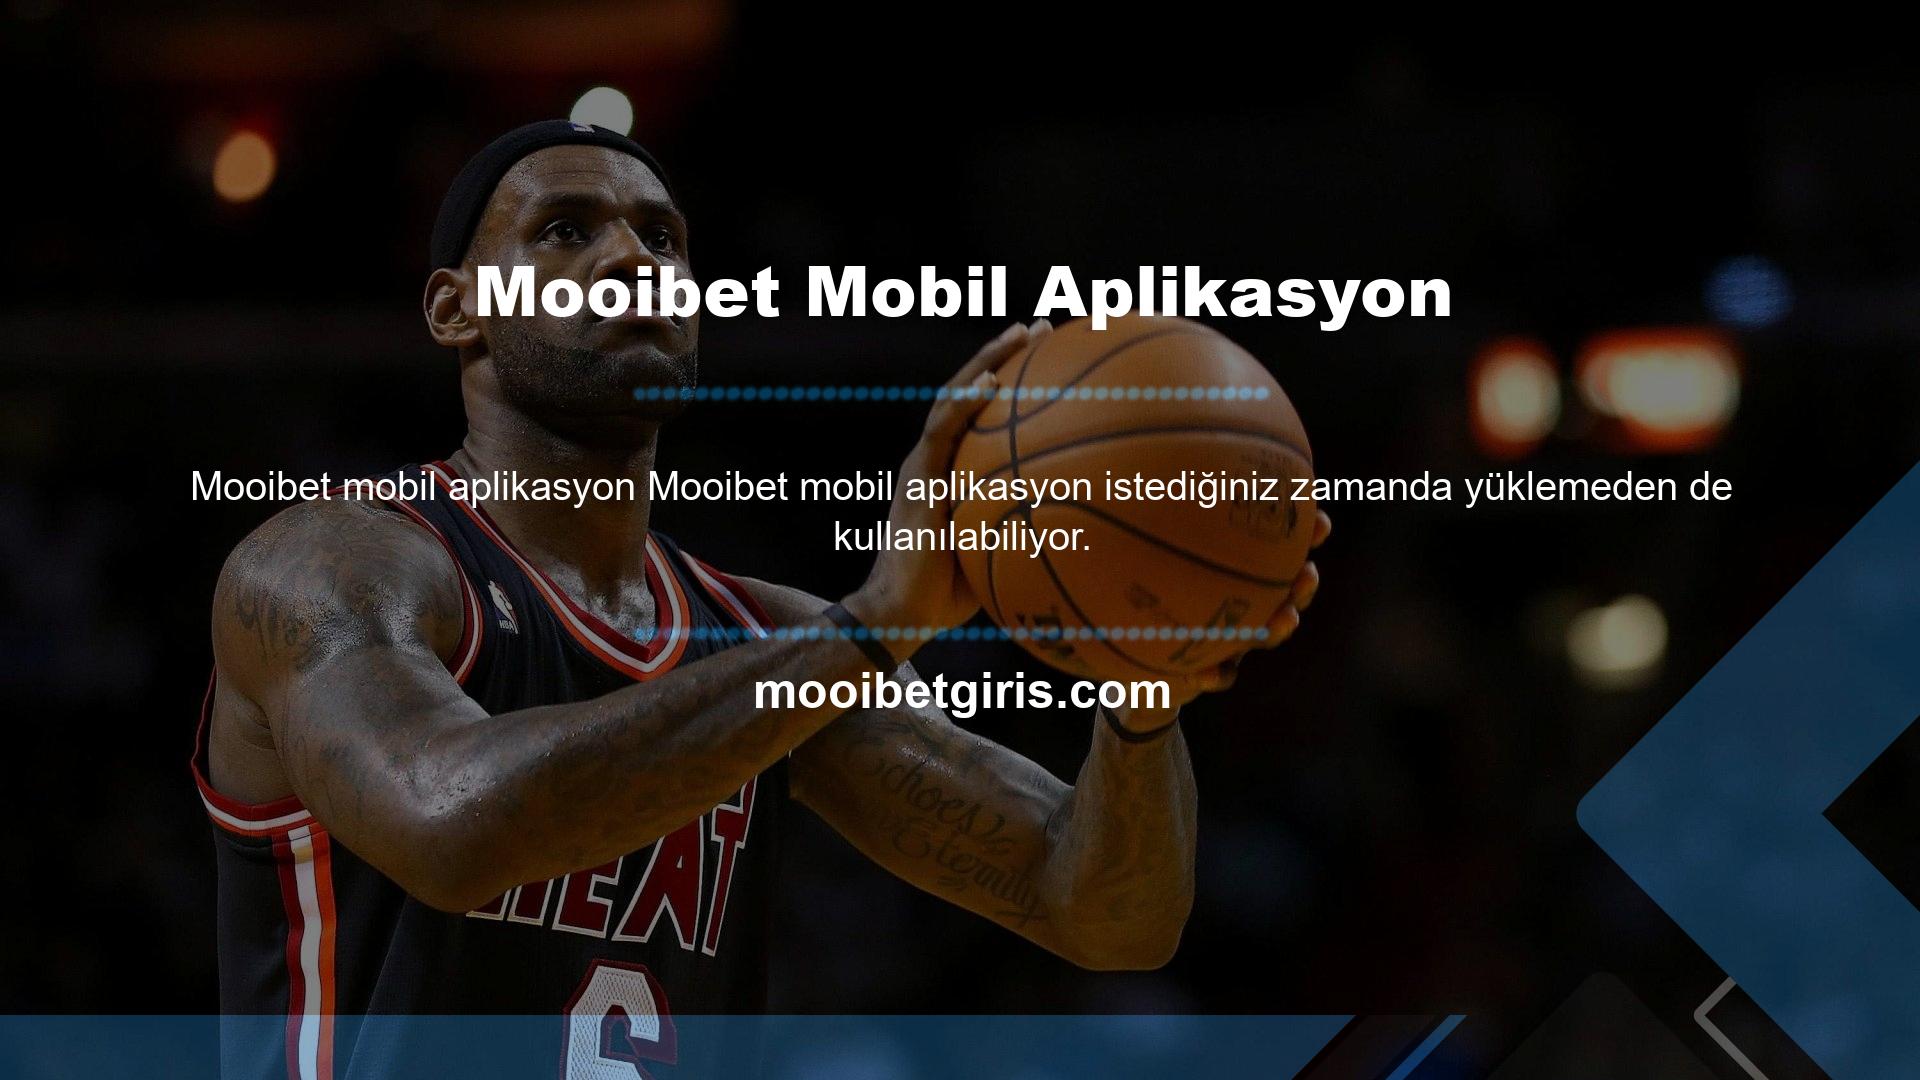 Mooibet Mobil Aplikasyon